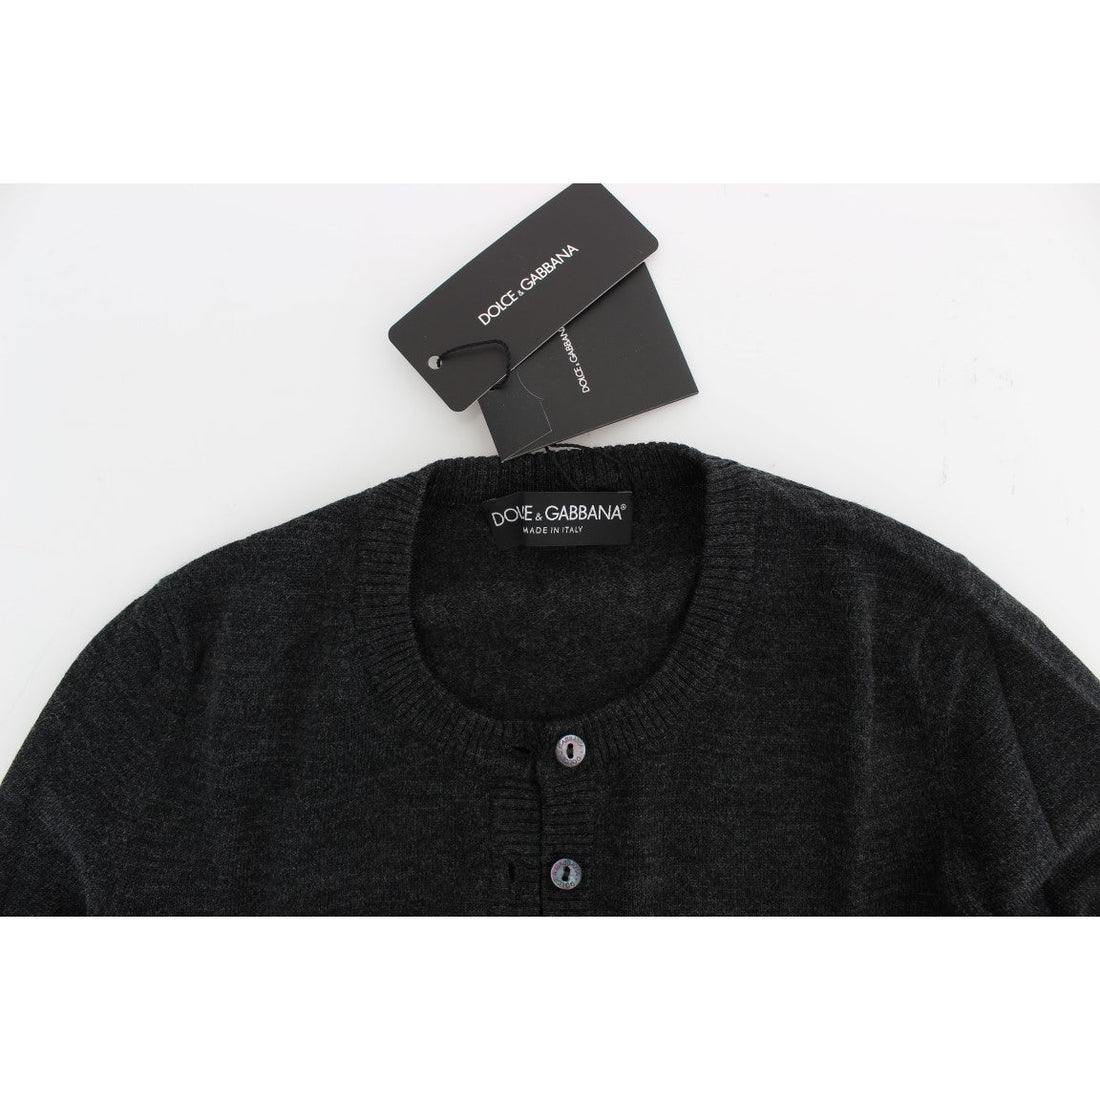 Dolce & Gabbana Gray Wool Button Cardigan Sweater - Paris Deluxe